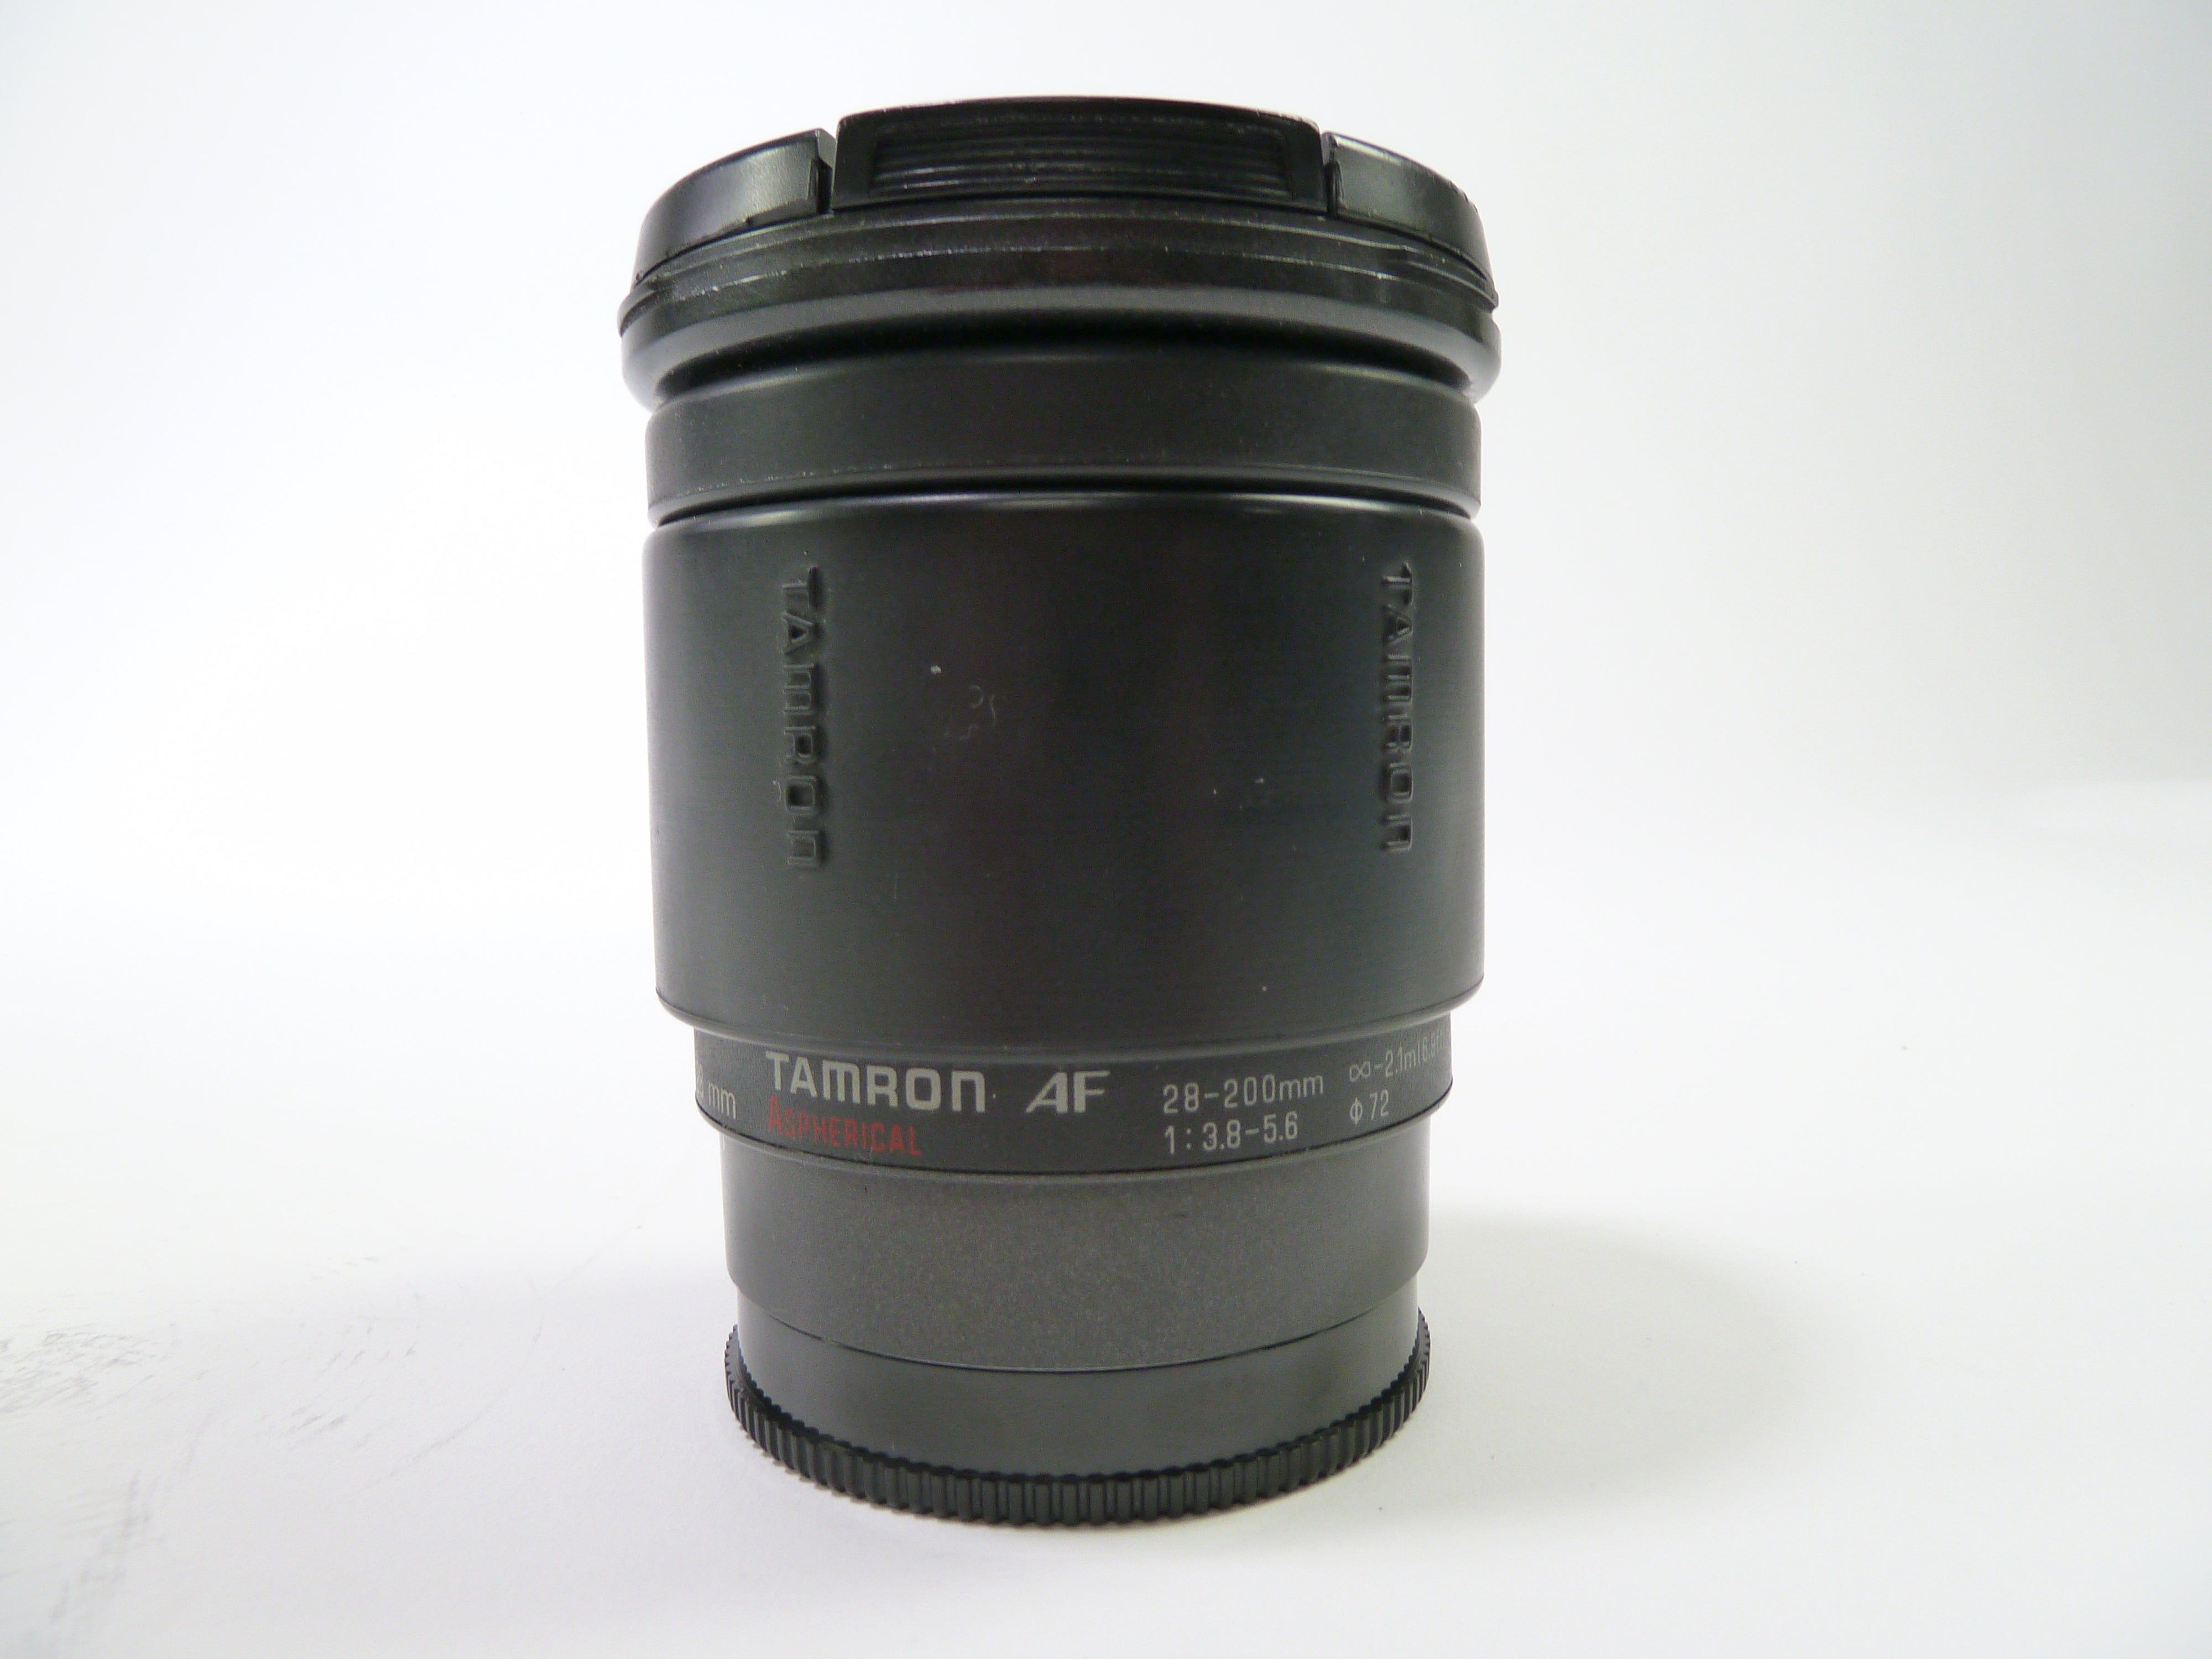 Tamron 28-200mm f/3.8-5.6 lens for use with Minolta AF